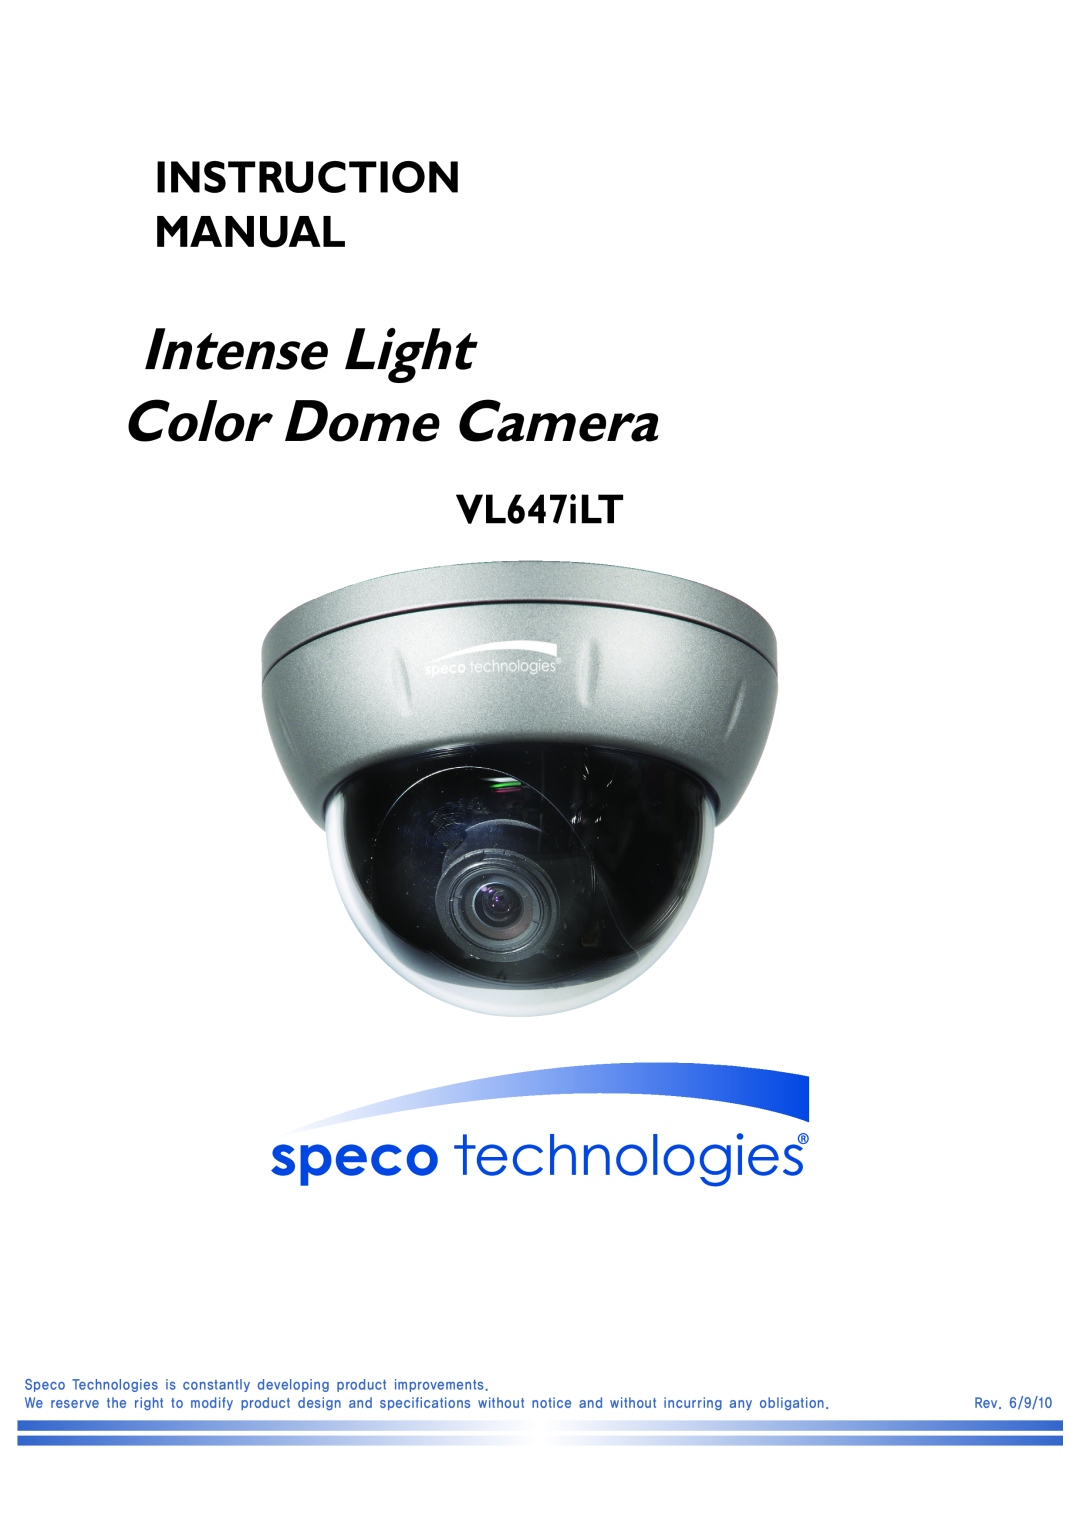 Speco Technologies VL647ILT instruction manual Intense Light Color Dome Camera, Instruction Manual, VL647iLT 